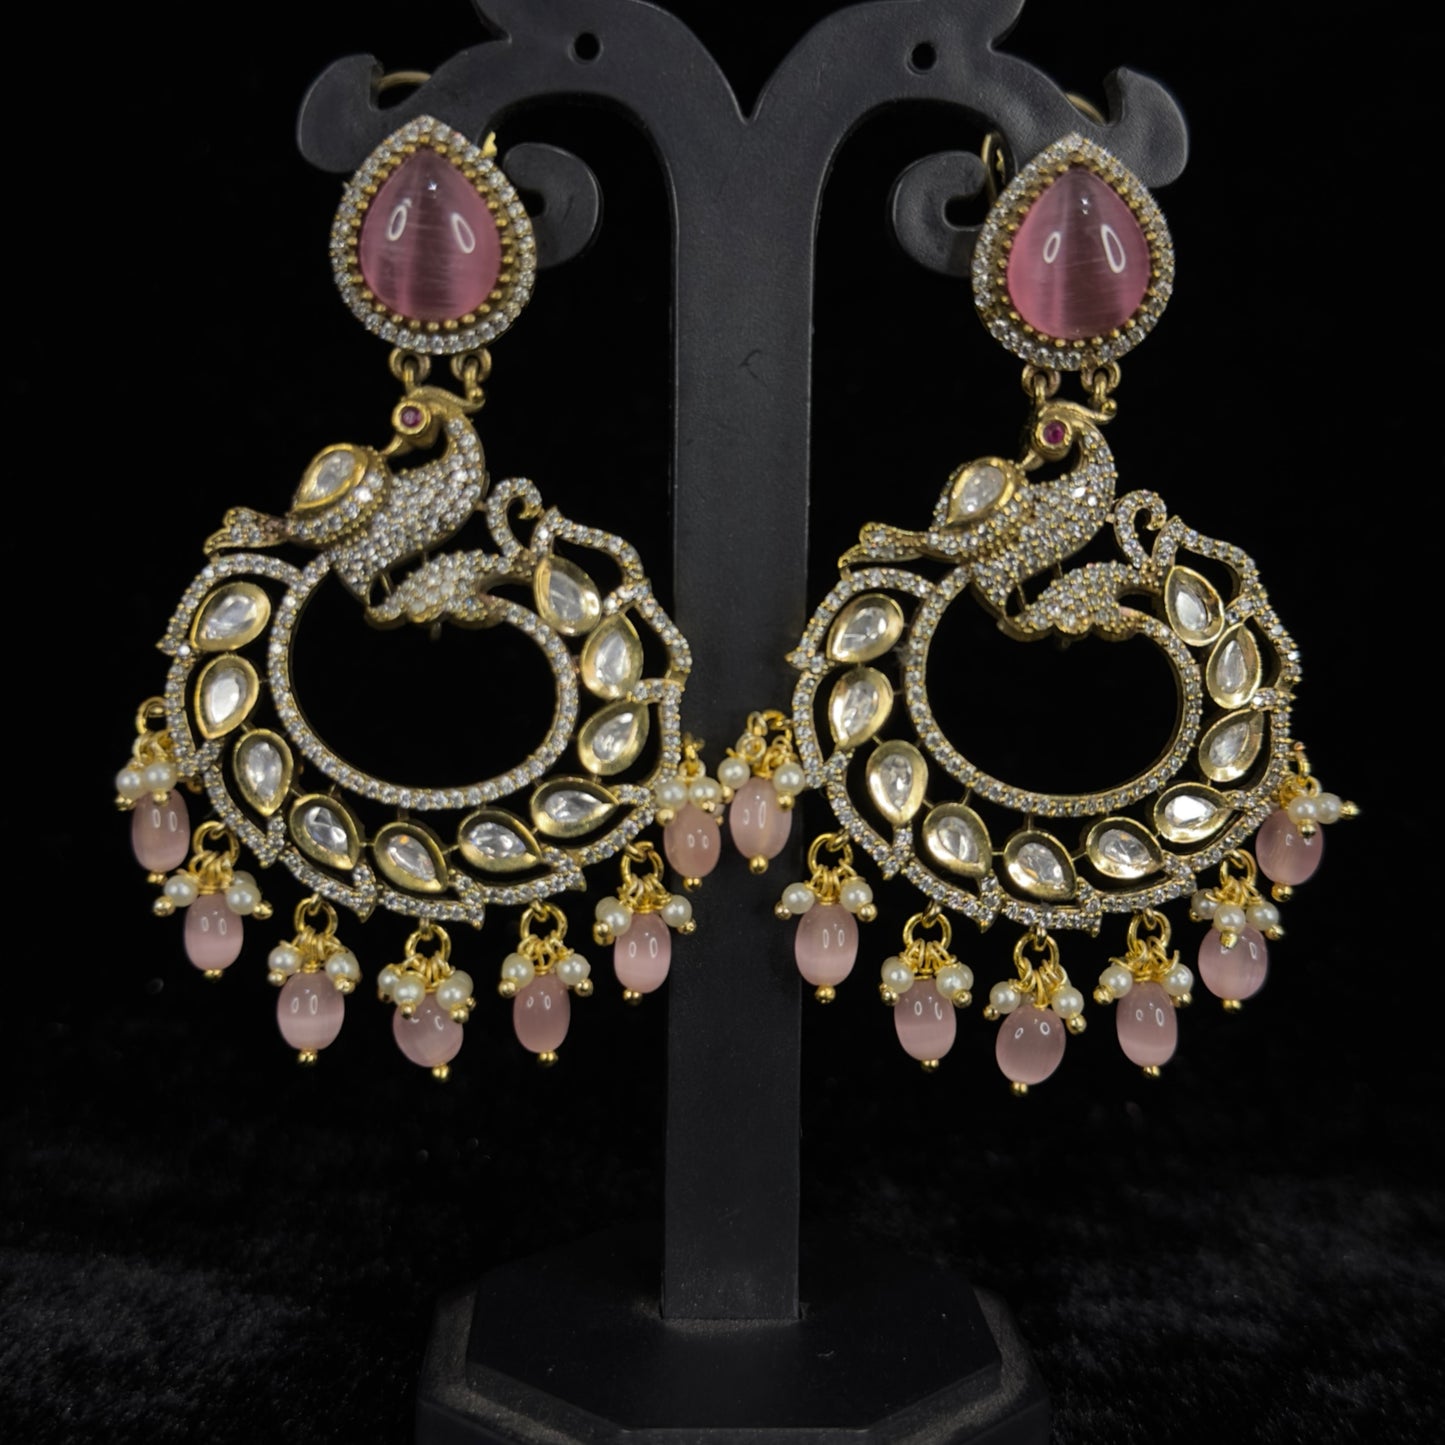 Alluring Victorian Polki Chandbalis Earrings with peacock motif